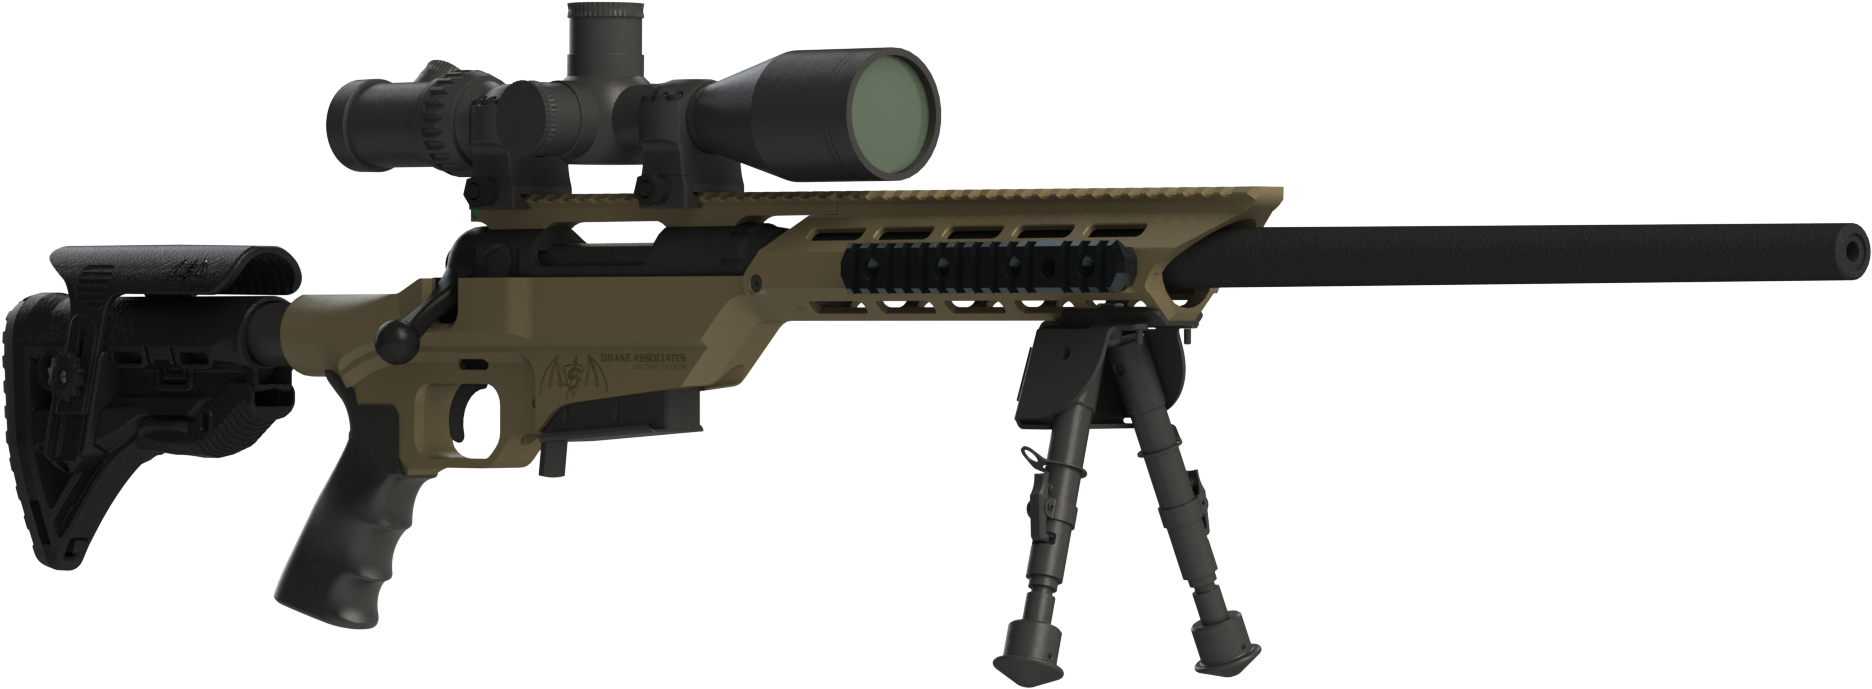 Sniper Rifle Transparent Background (1920x1080), Png Download